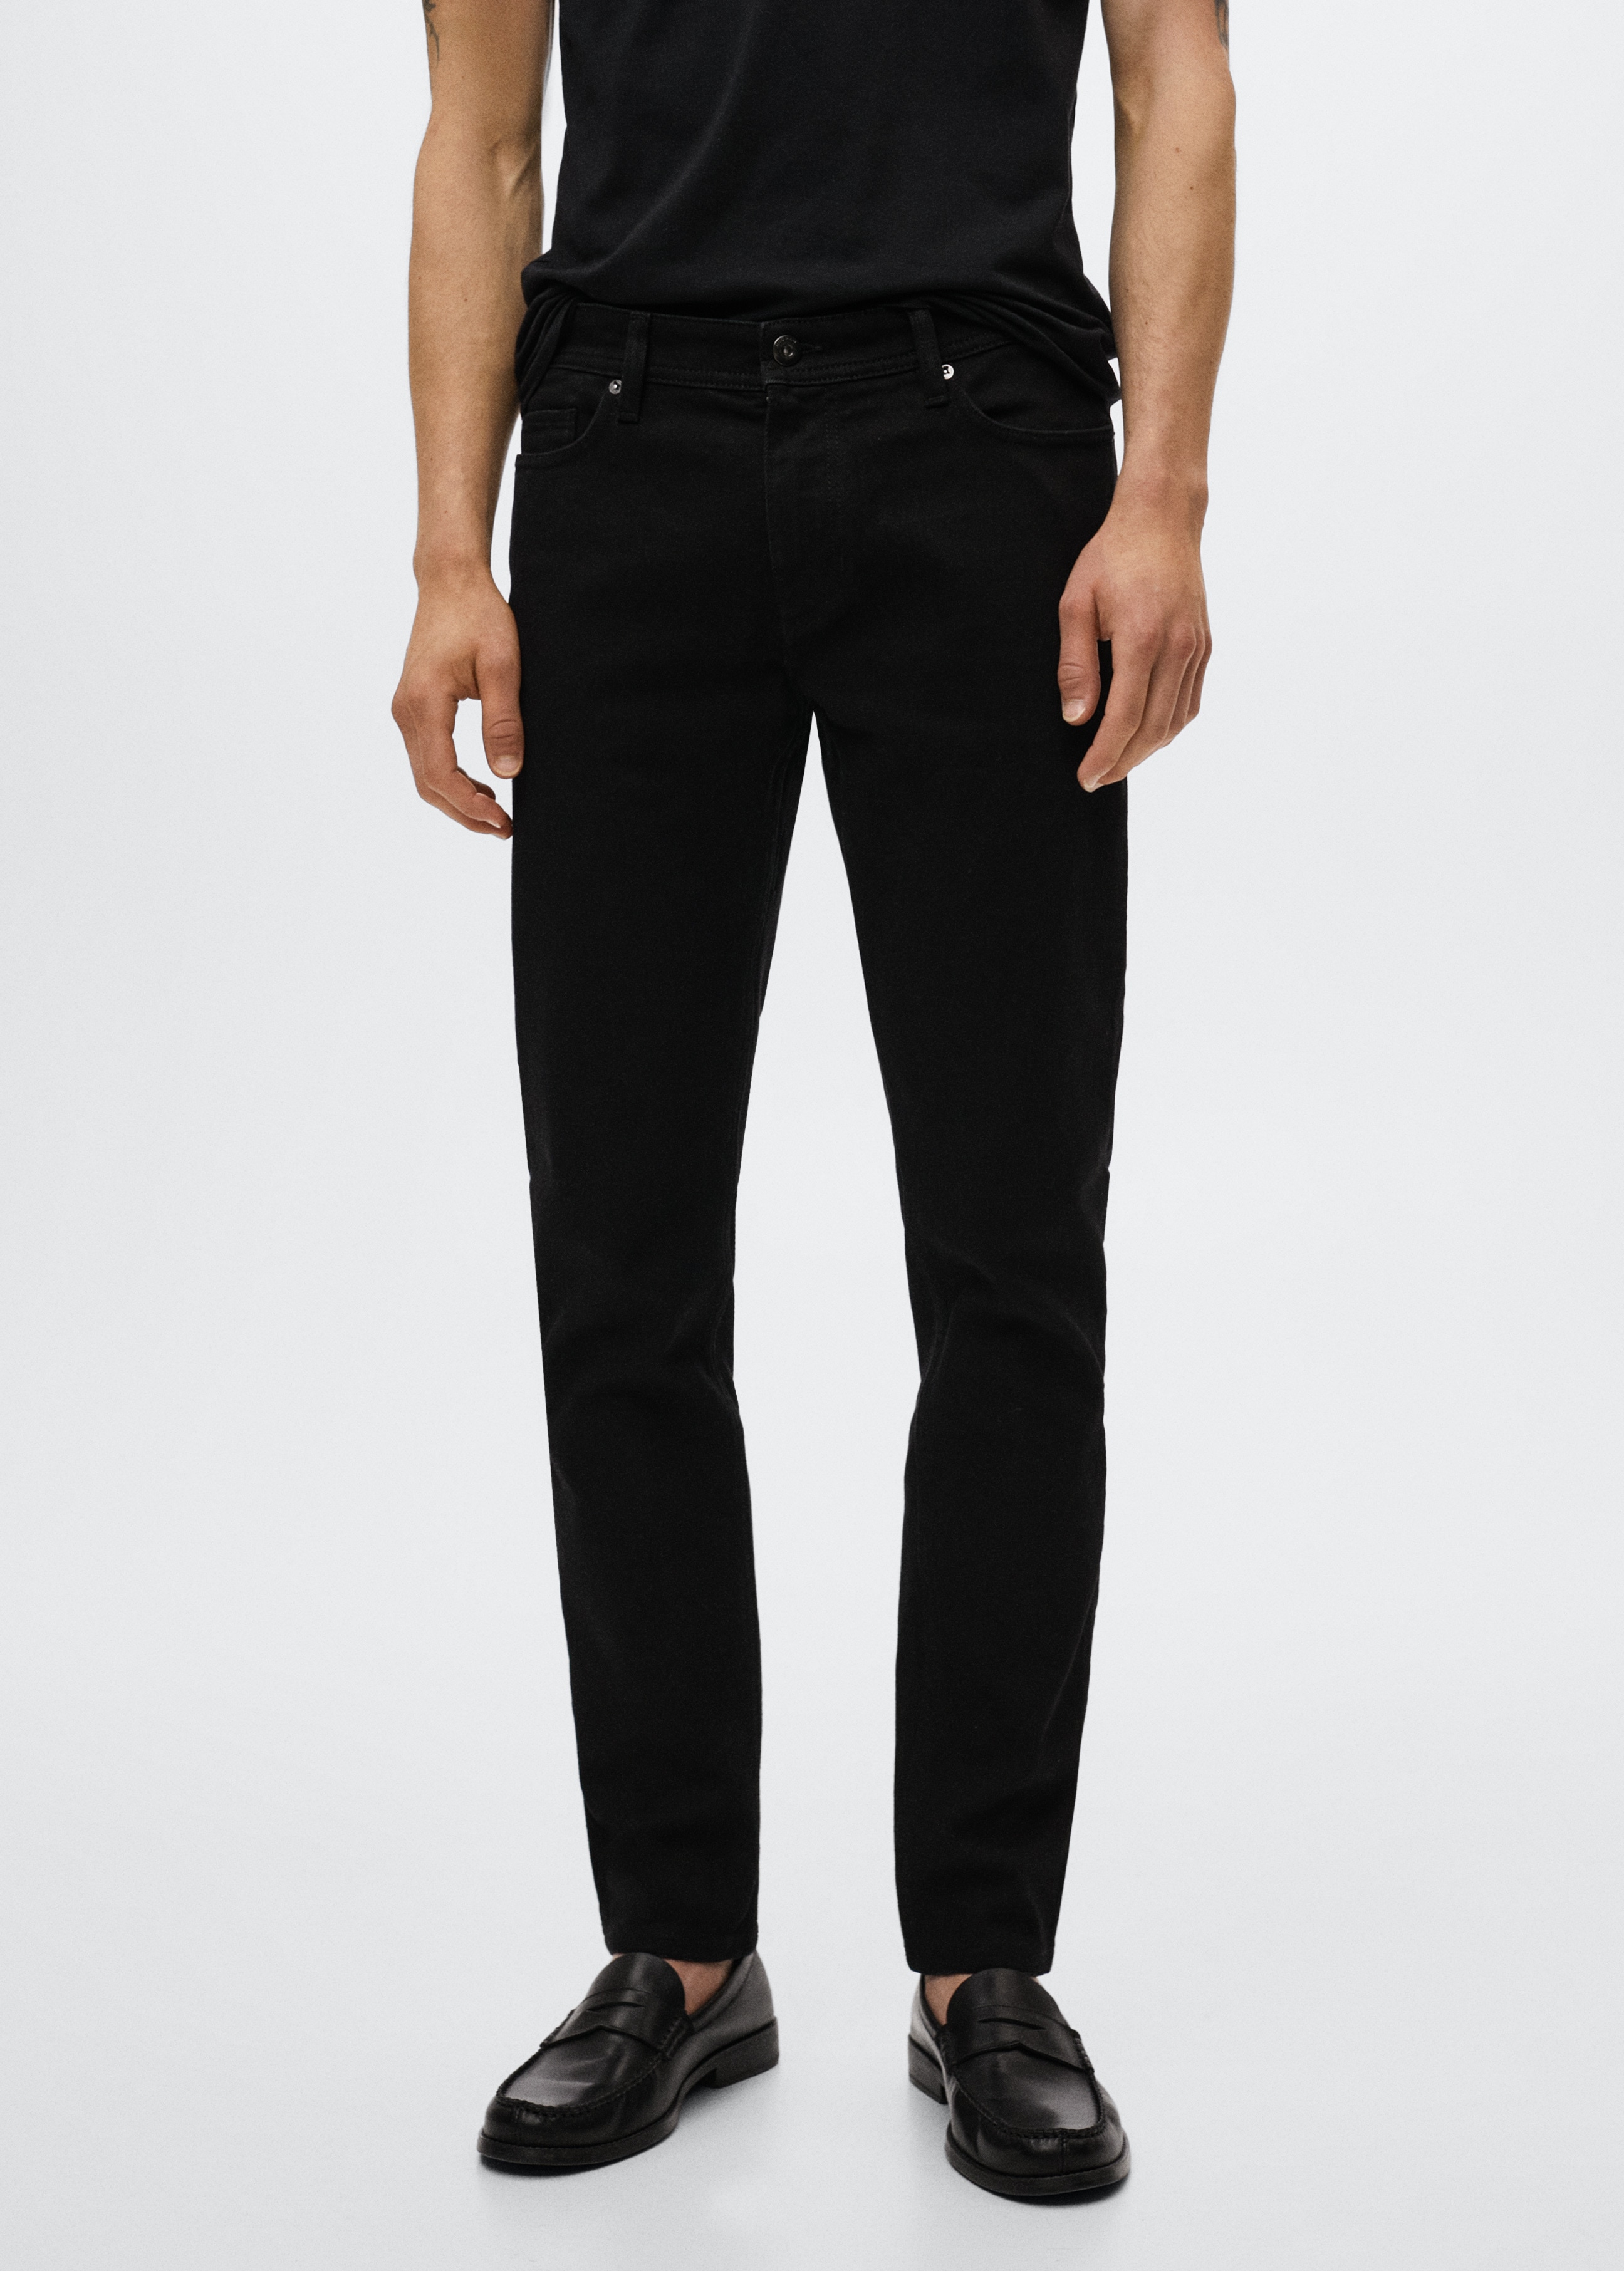 Jan slim-fit jeans - Medium plane